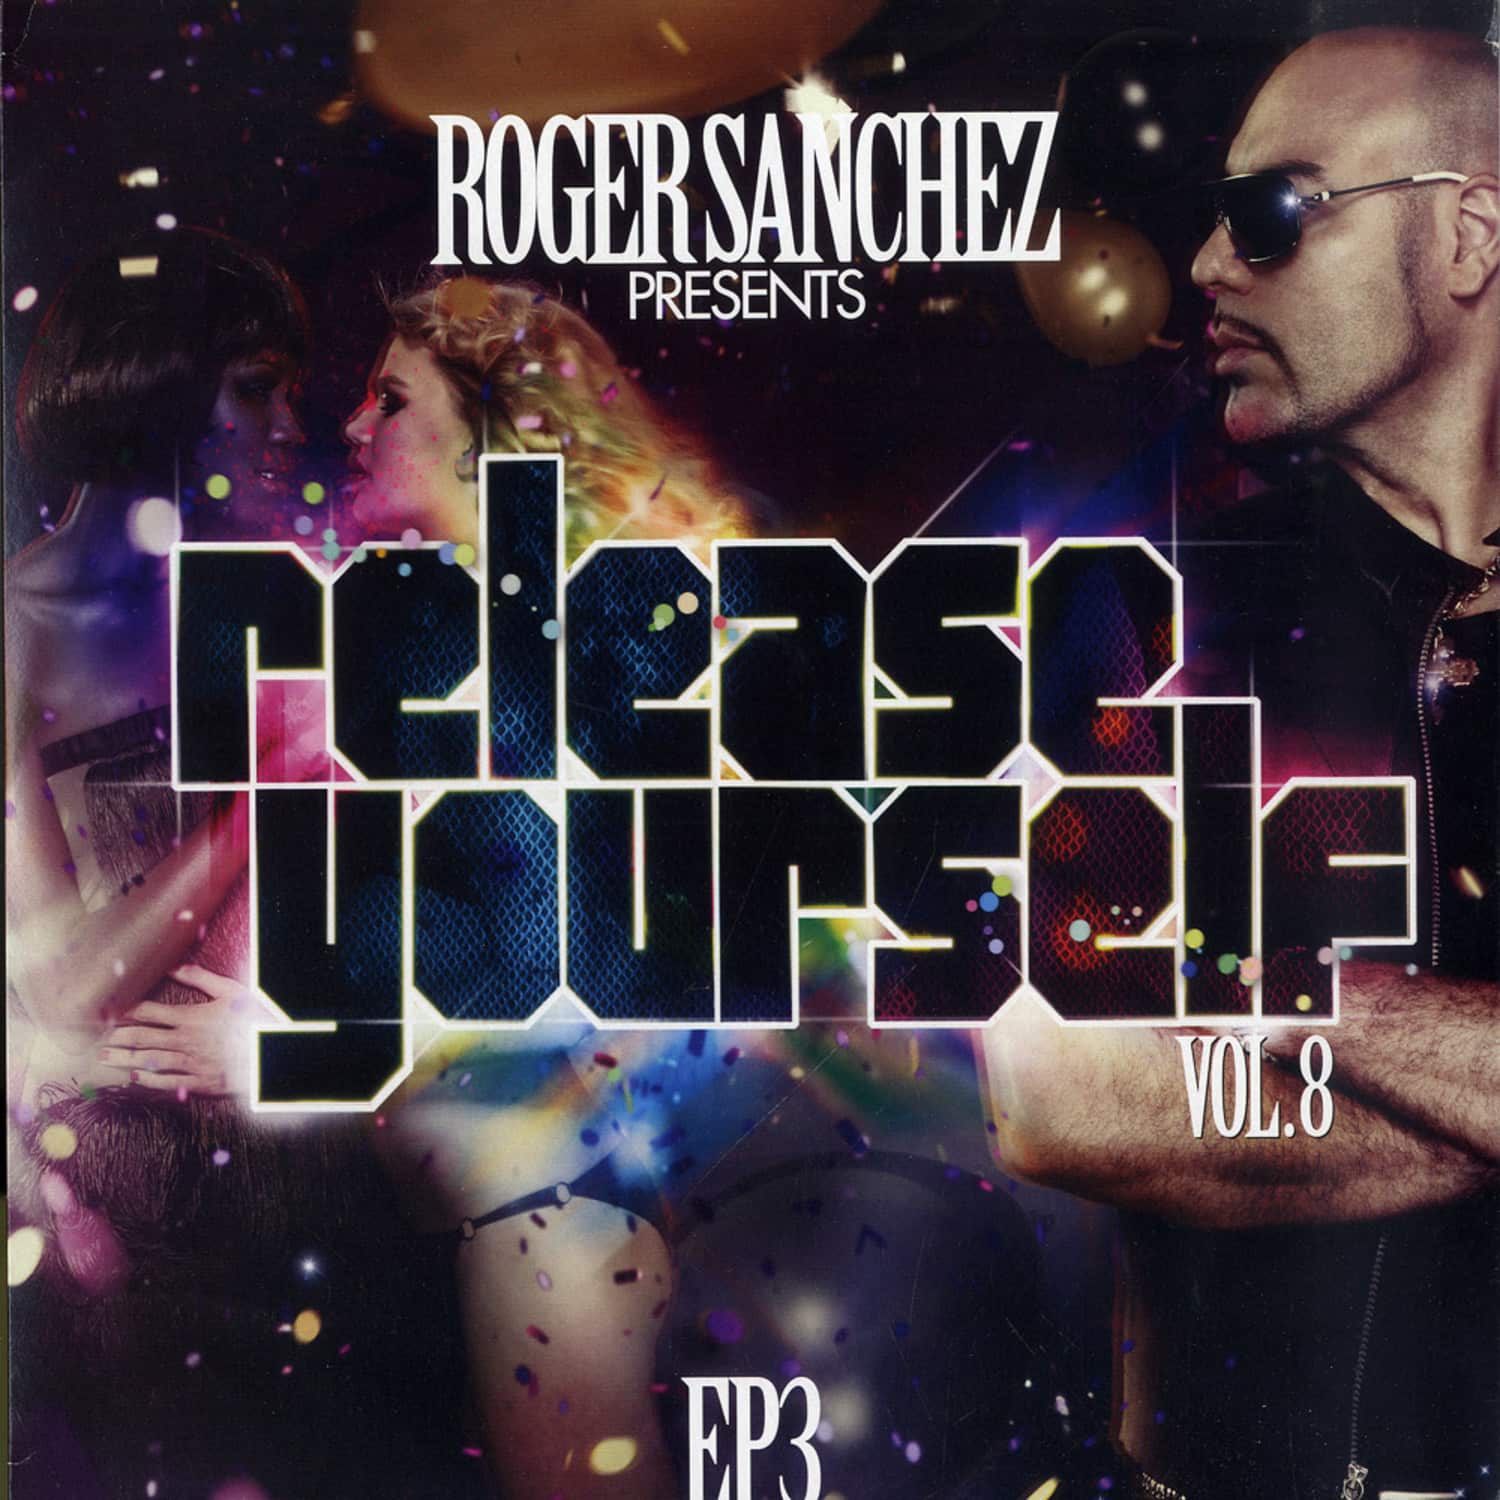 Roger Sanchez - RELEASE YOURSELF 8 EP 3